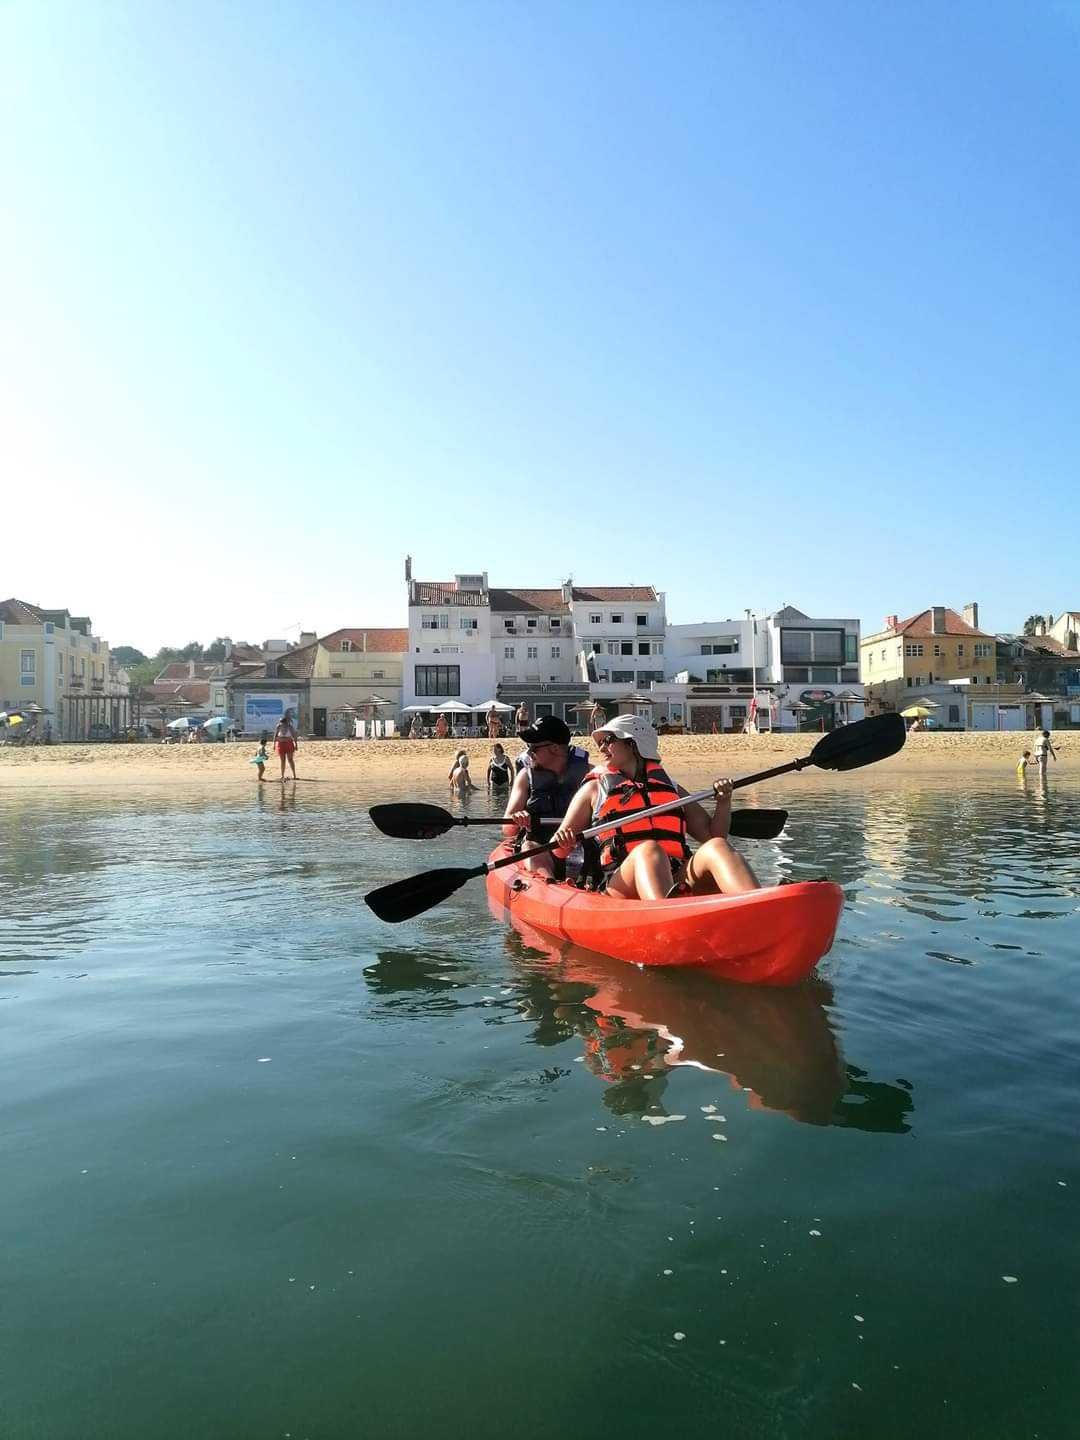 Kayaks duplos e individuais